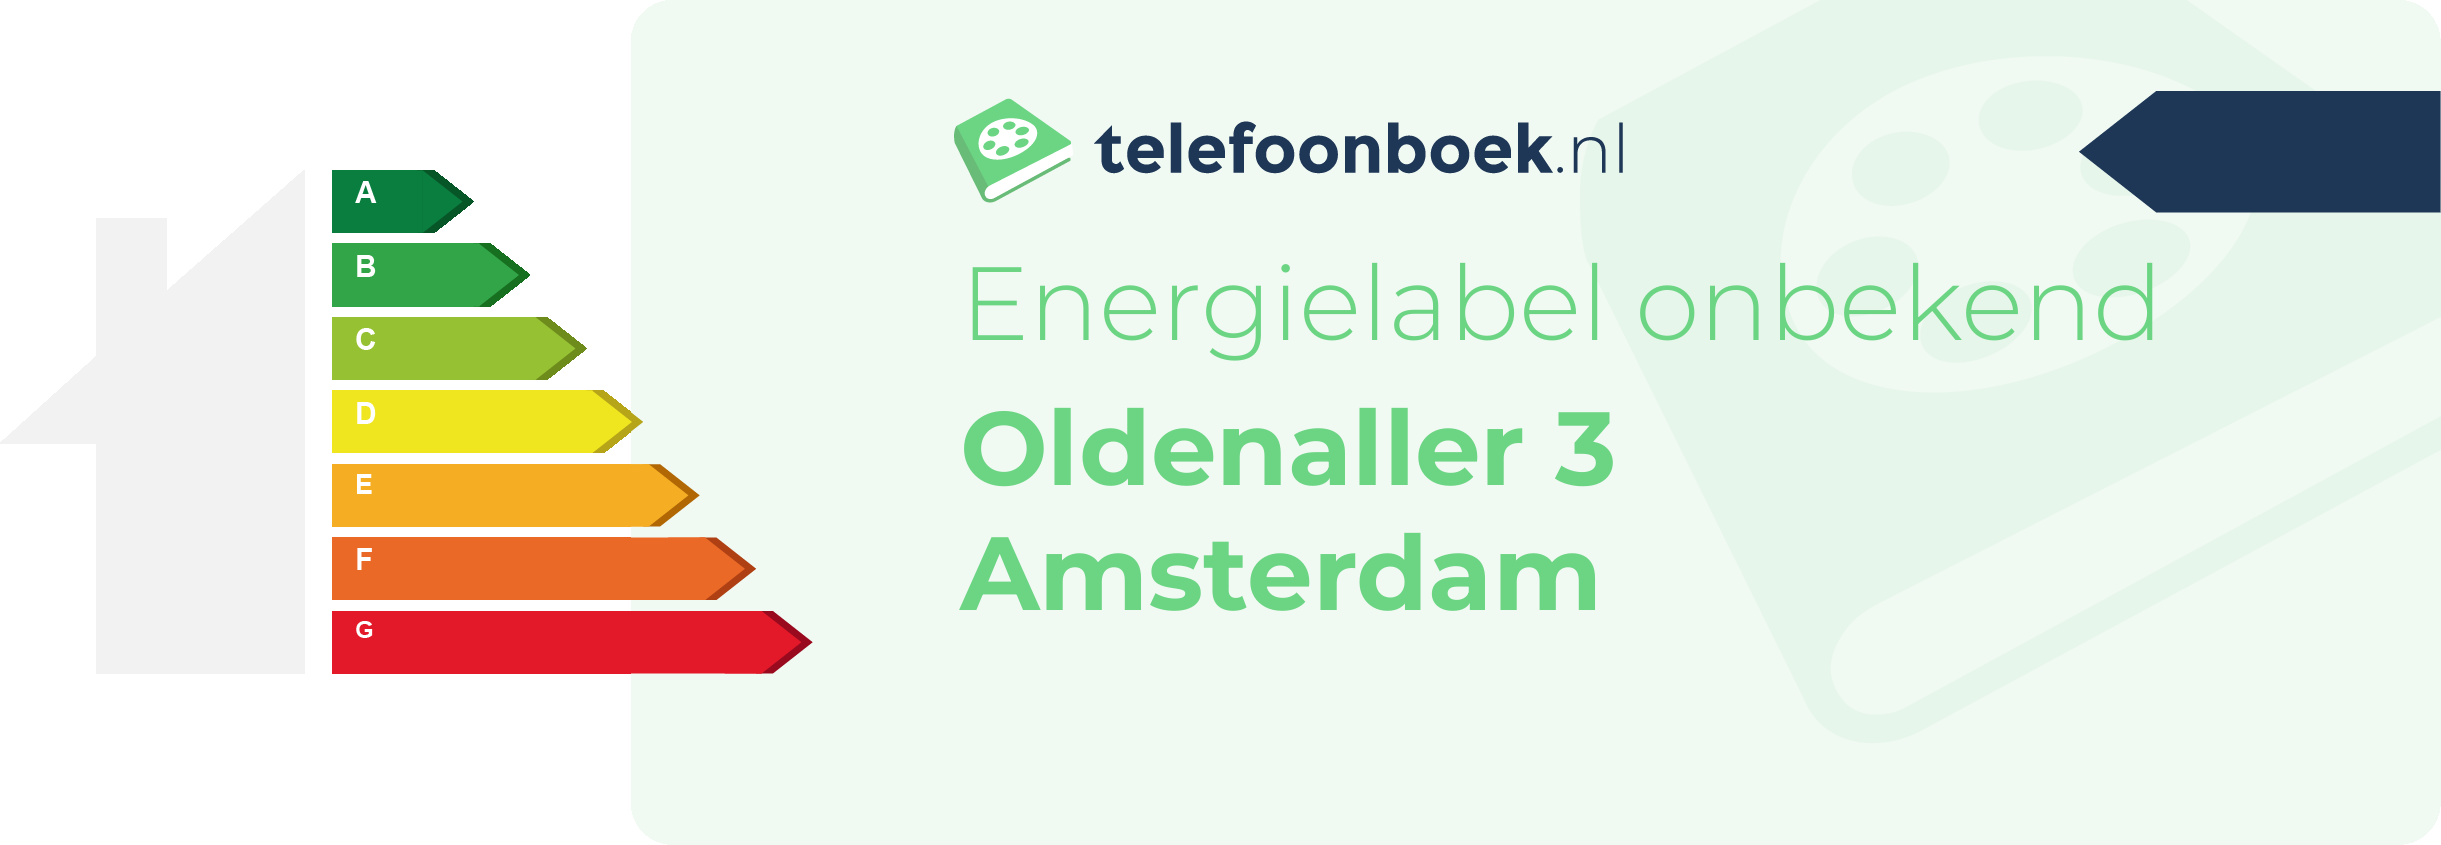 Energielabel Oldenaller 3 Amsterdam